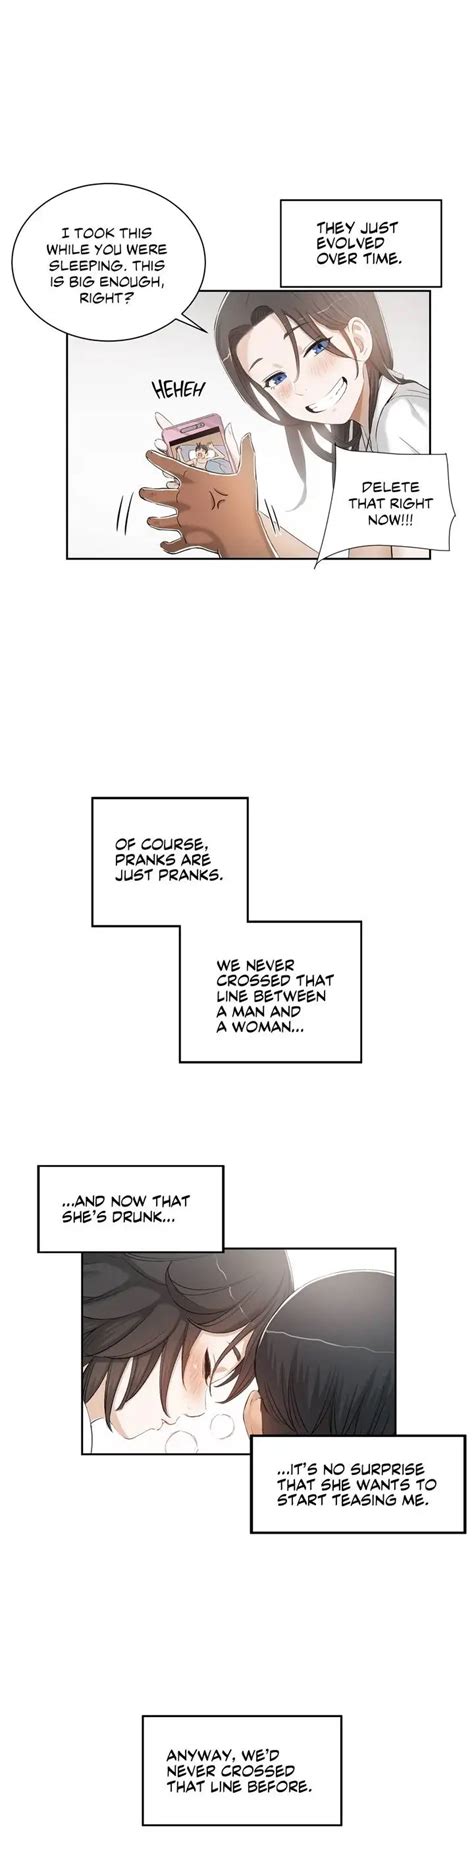 Sex Lessons Chapter 1 Manga18fx